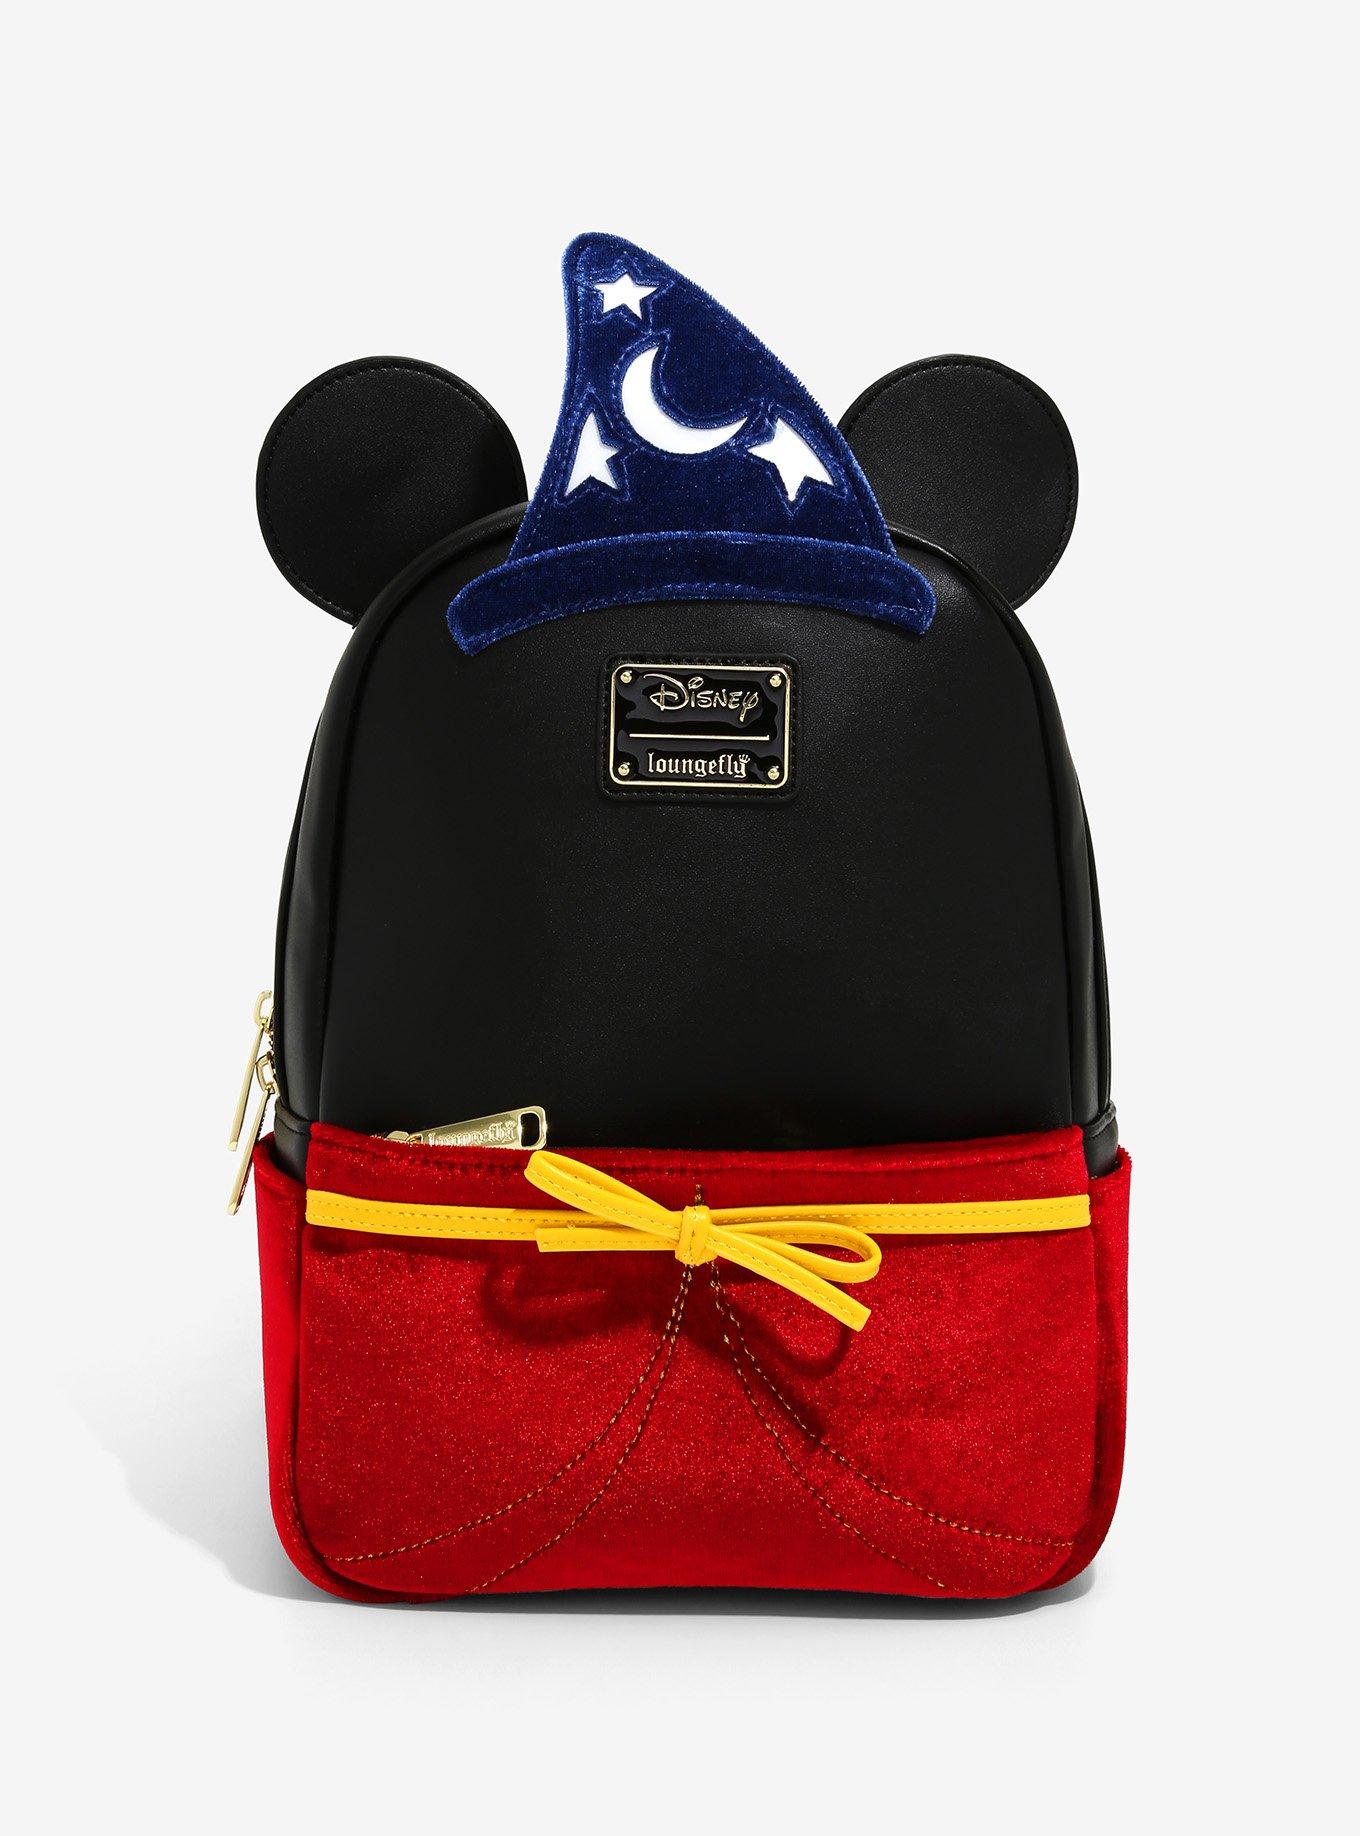 Disney Fantasia Sorcerer Mickey Mouse Mini Backpack